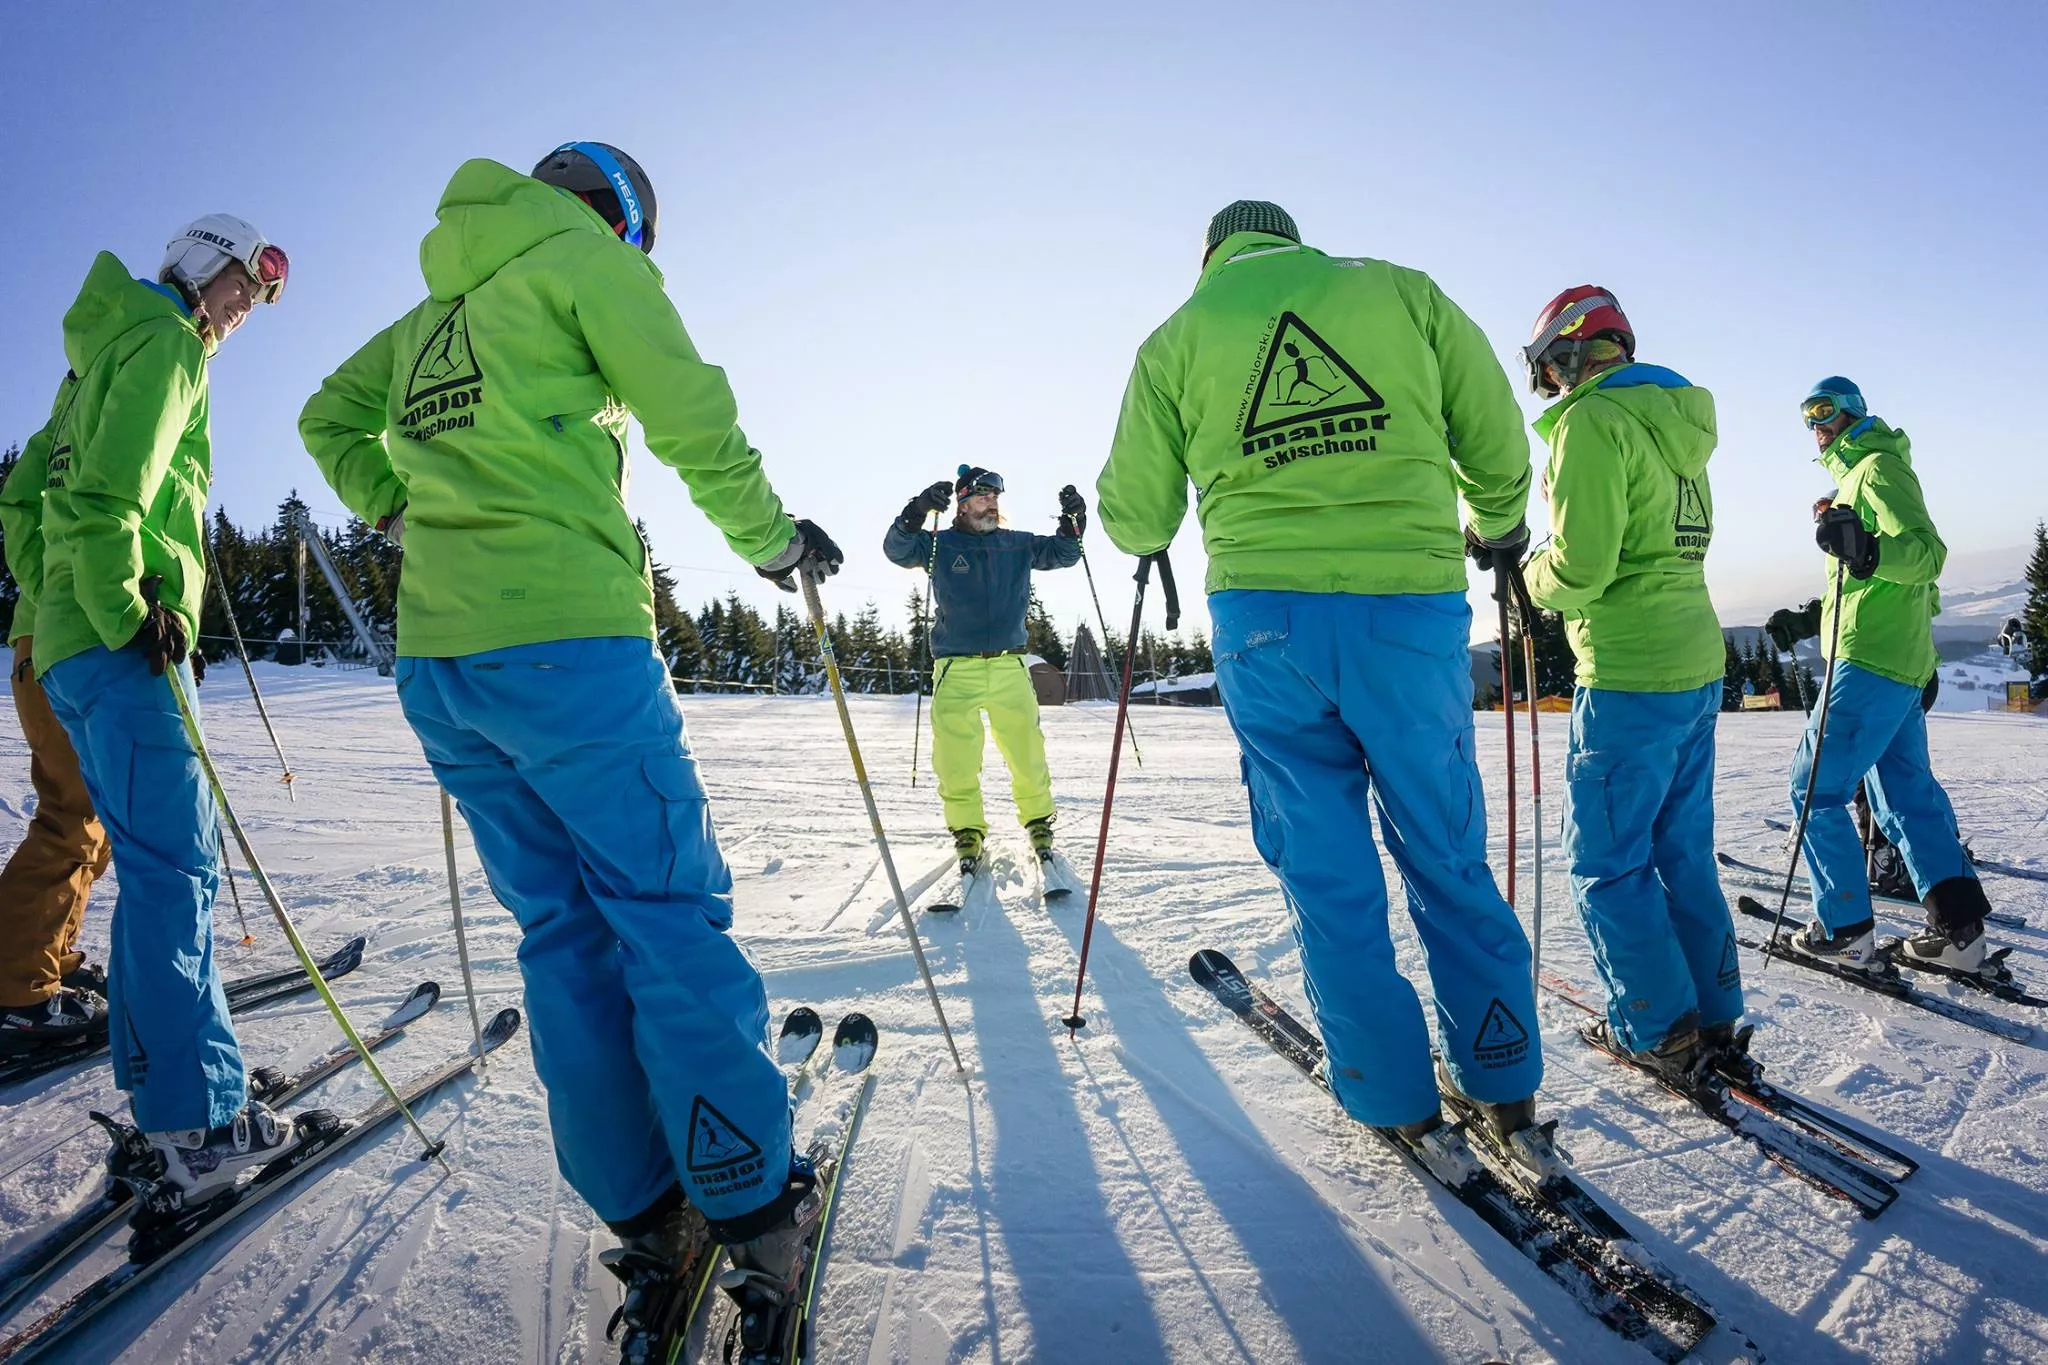 Ski School & Rental - JK Freeheel in Slovakia, Europe | Snowboarding,Skiing - Rated 1